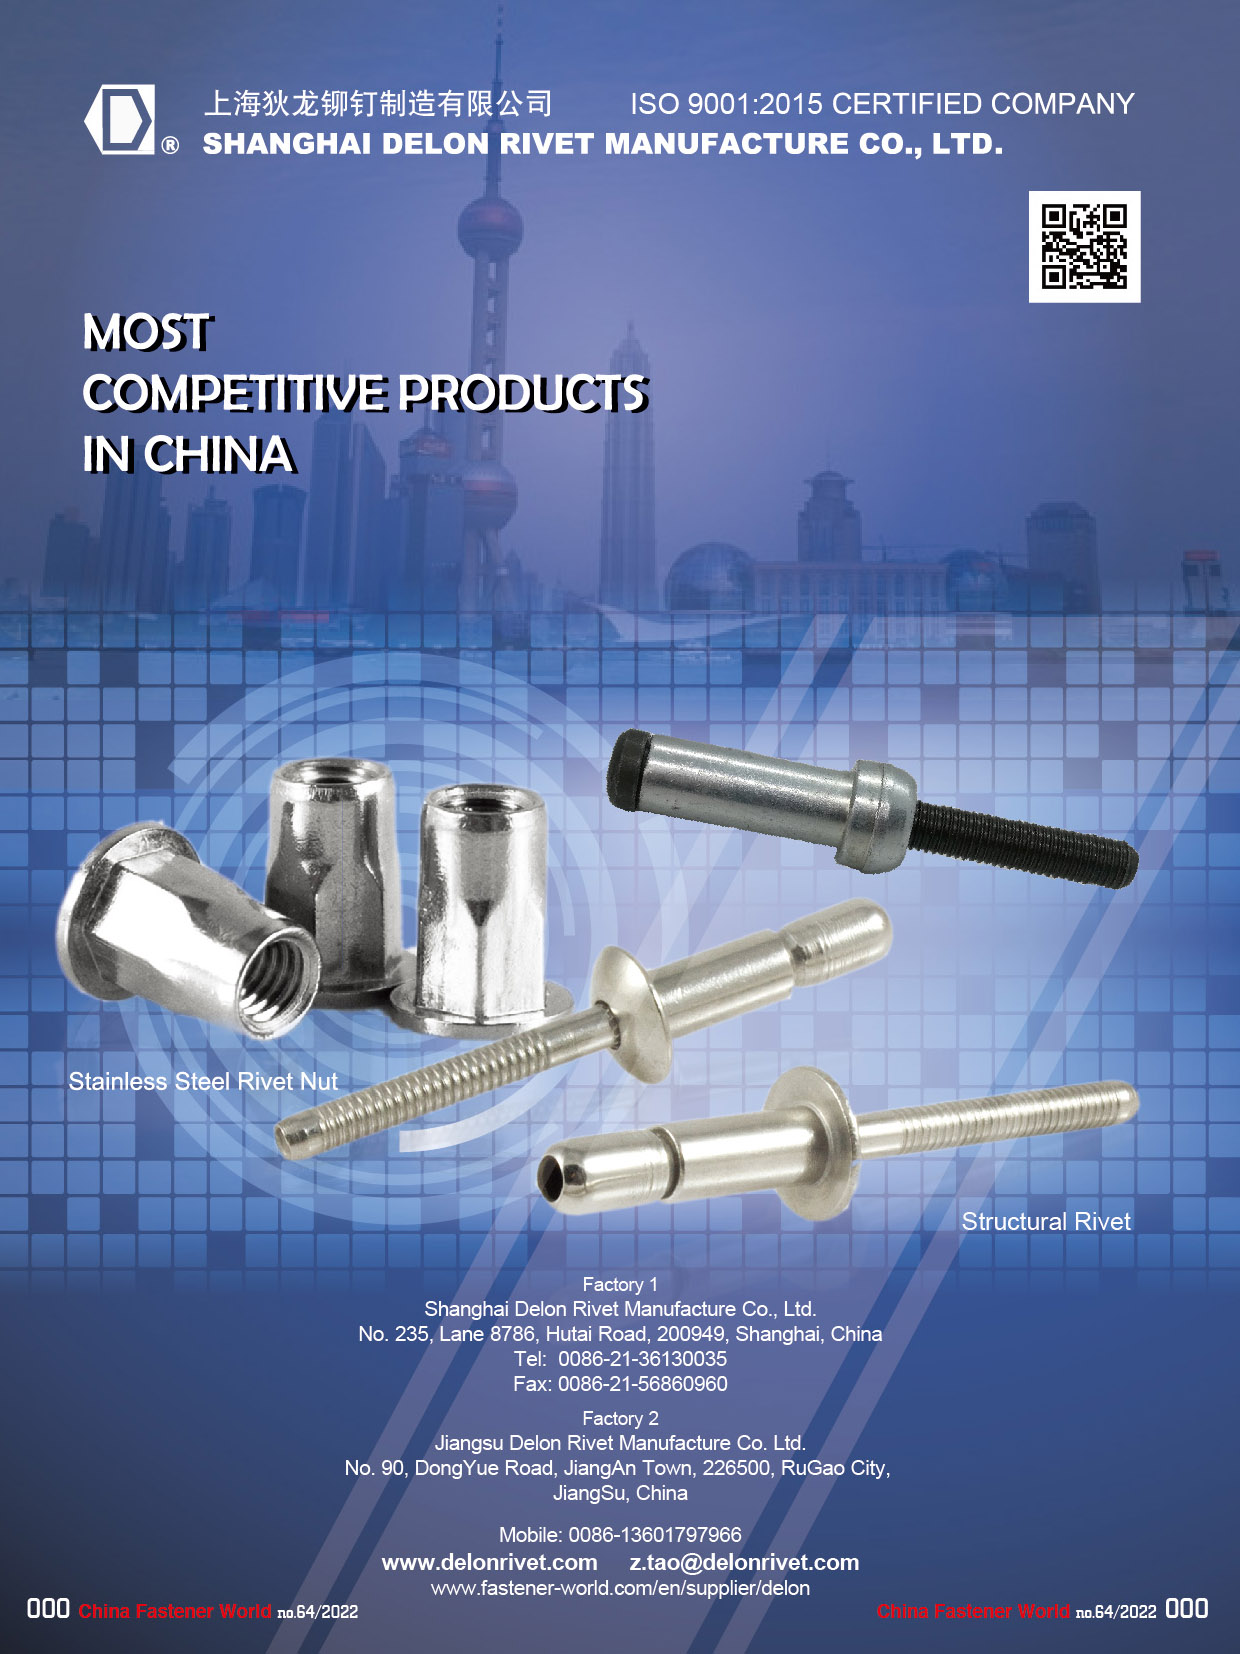  SHANGHAI DELON SPECIAL RIVET MANUFACTURE CO., LTD. Stainless Steel Rivet Nut, Structure Rivet